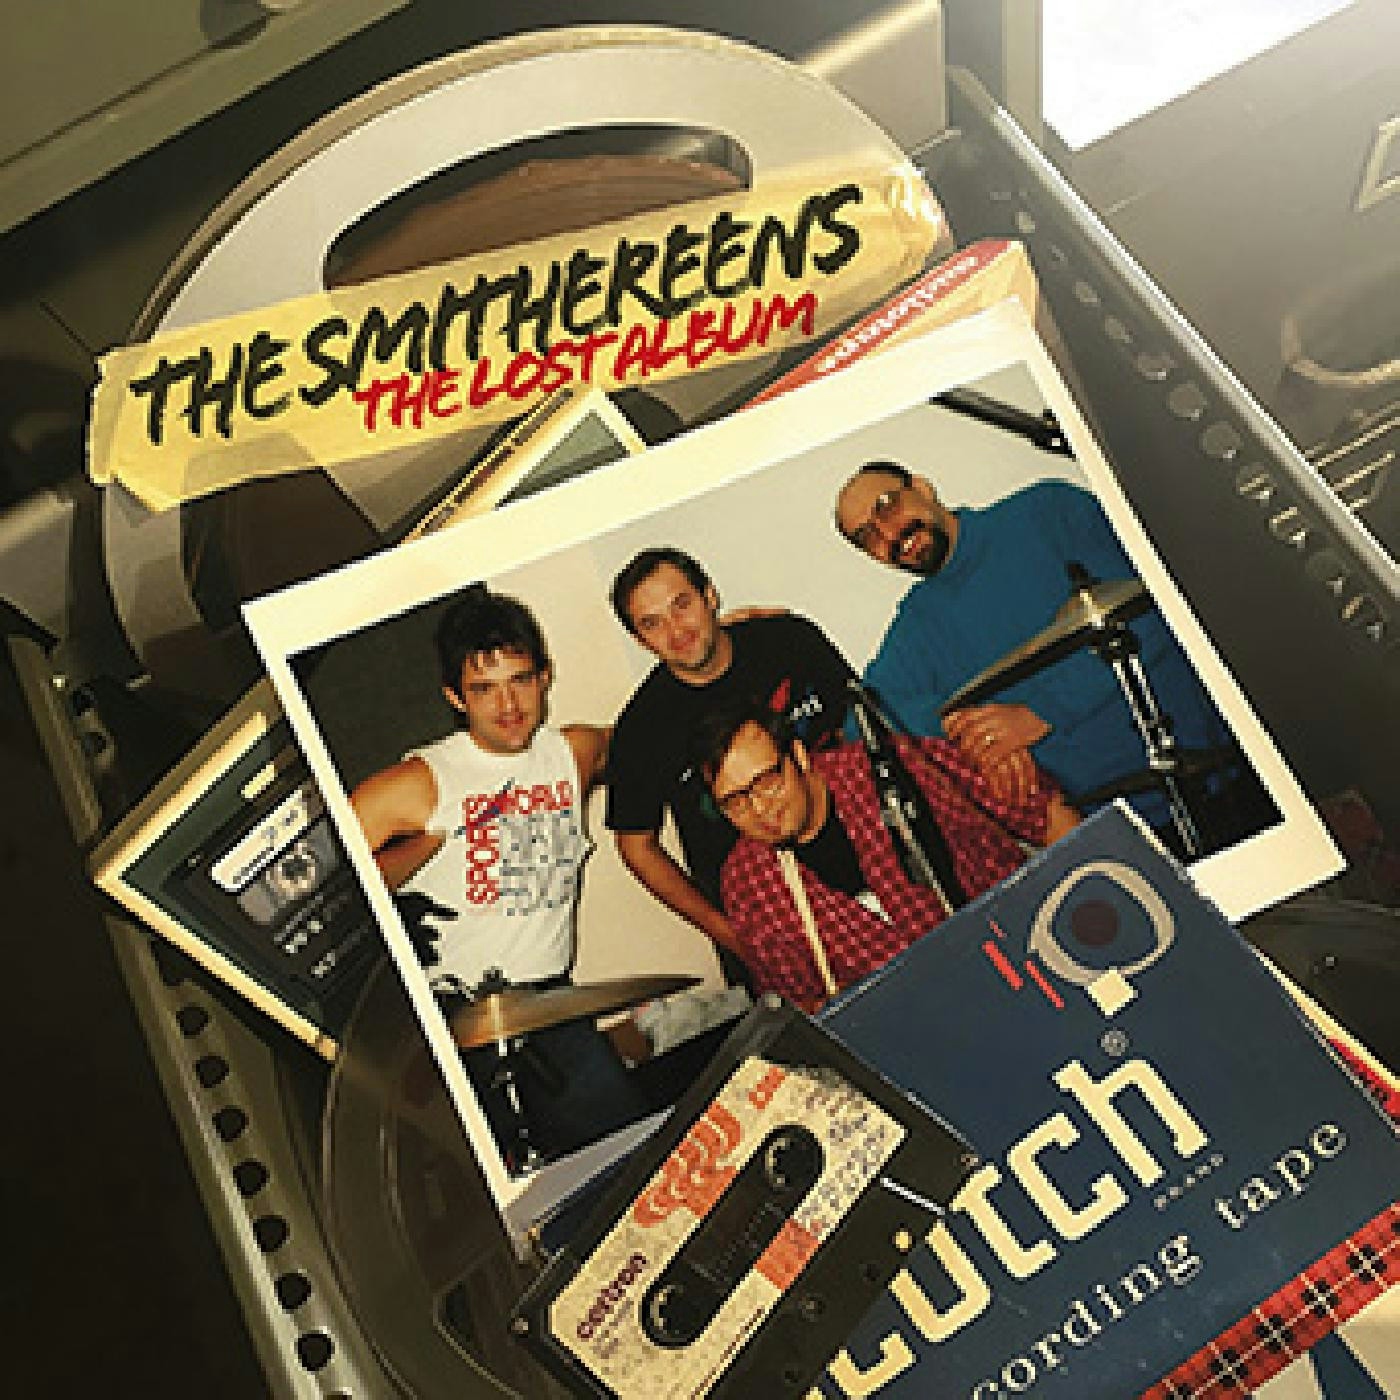 Album artwork for Album artwork for The Lost Album by The Smithereens by The Lost Album - The Smithereens